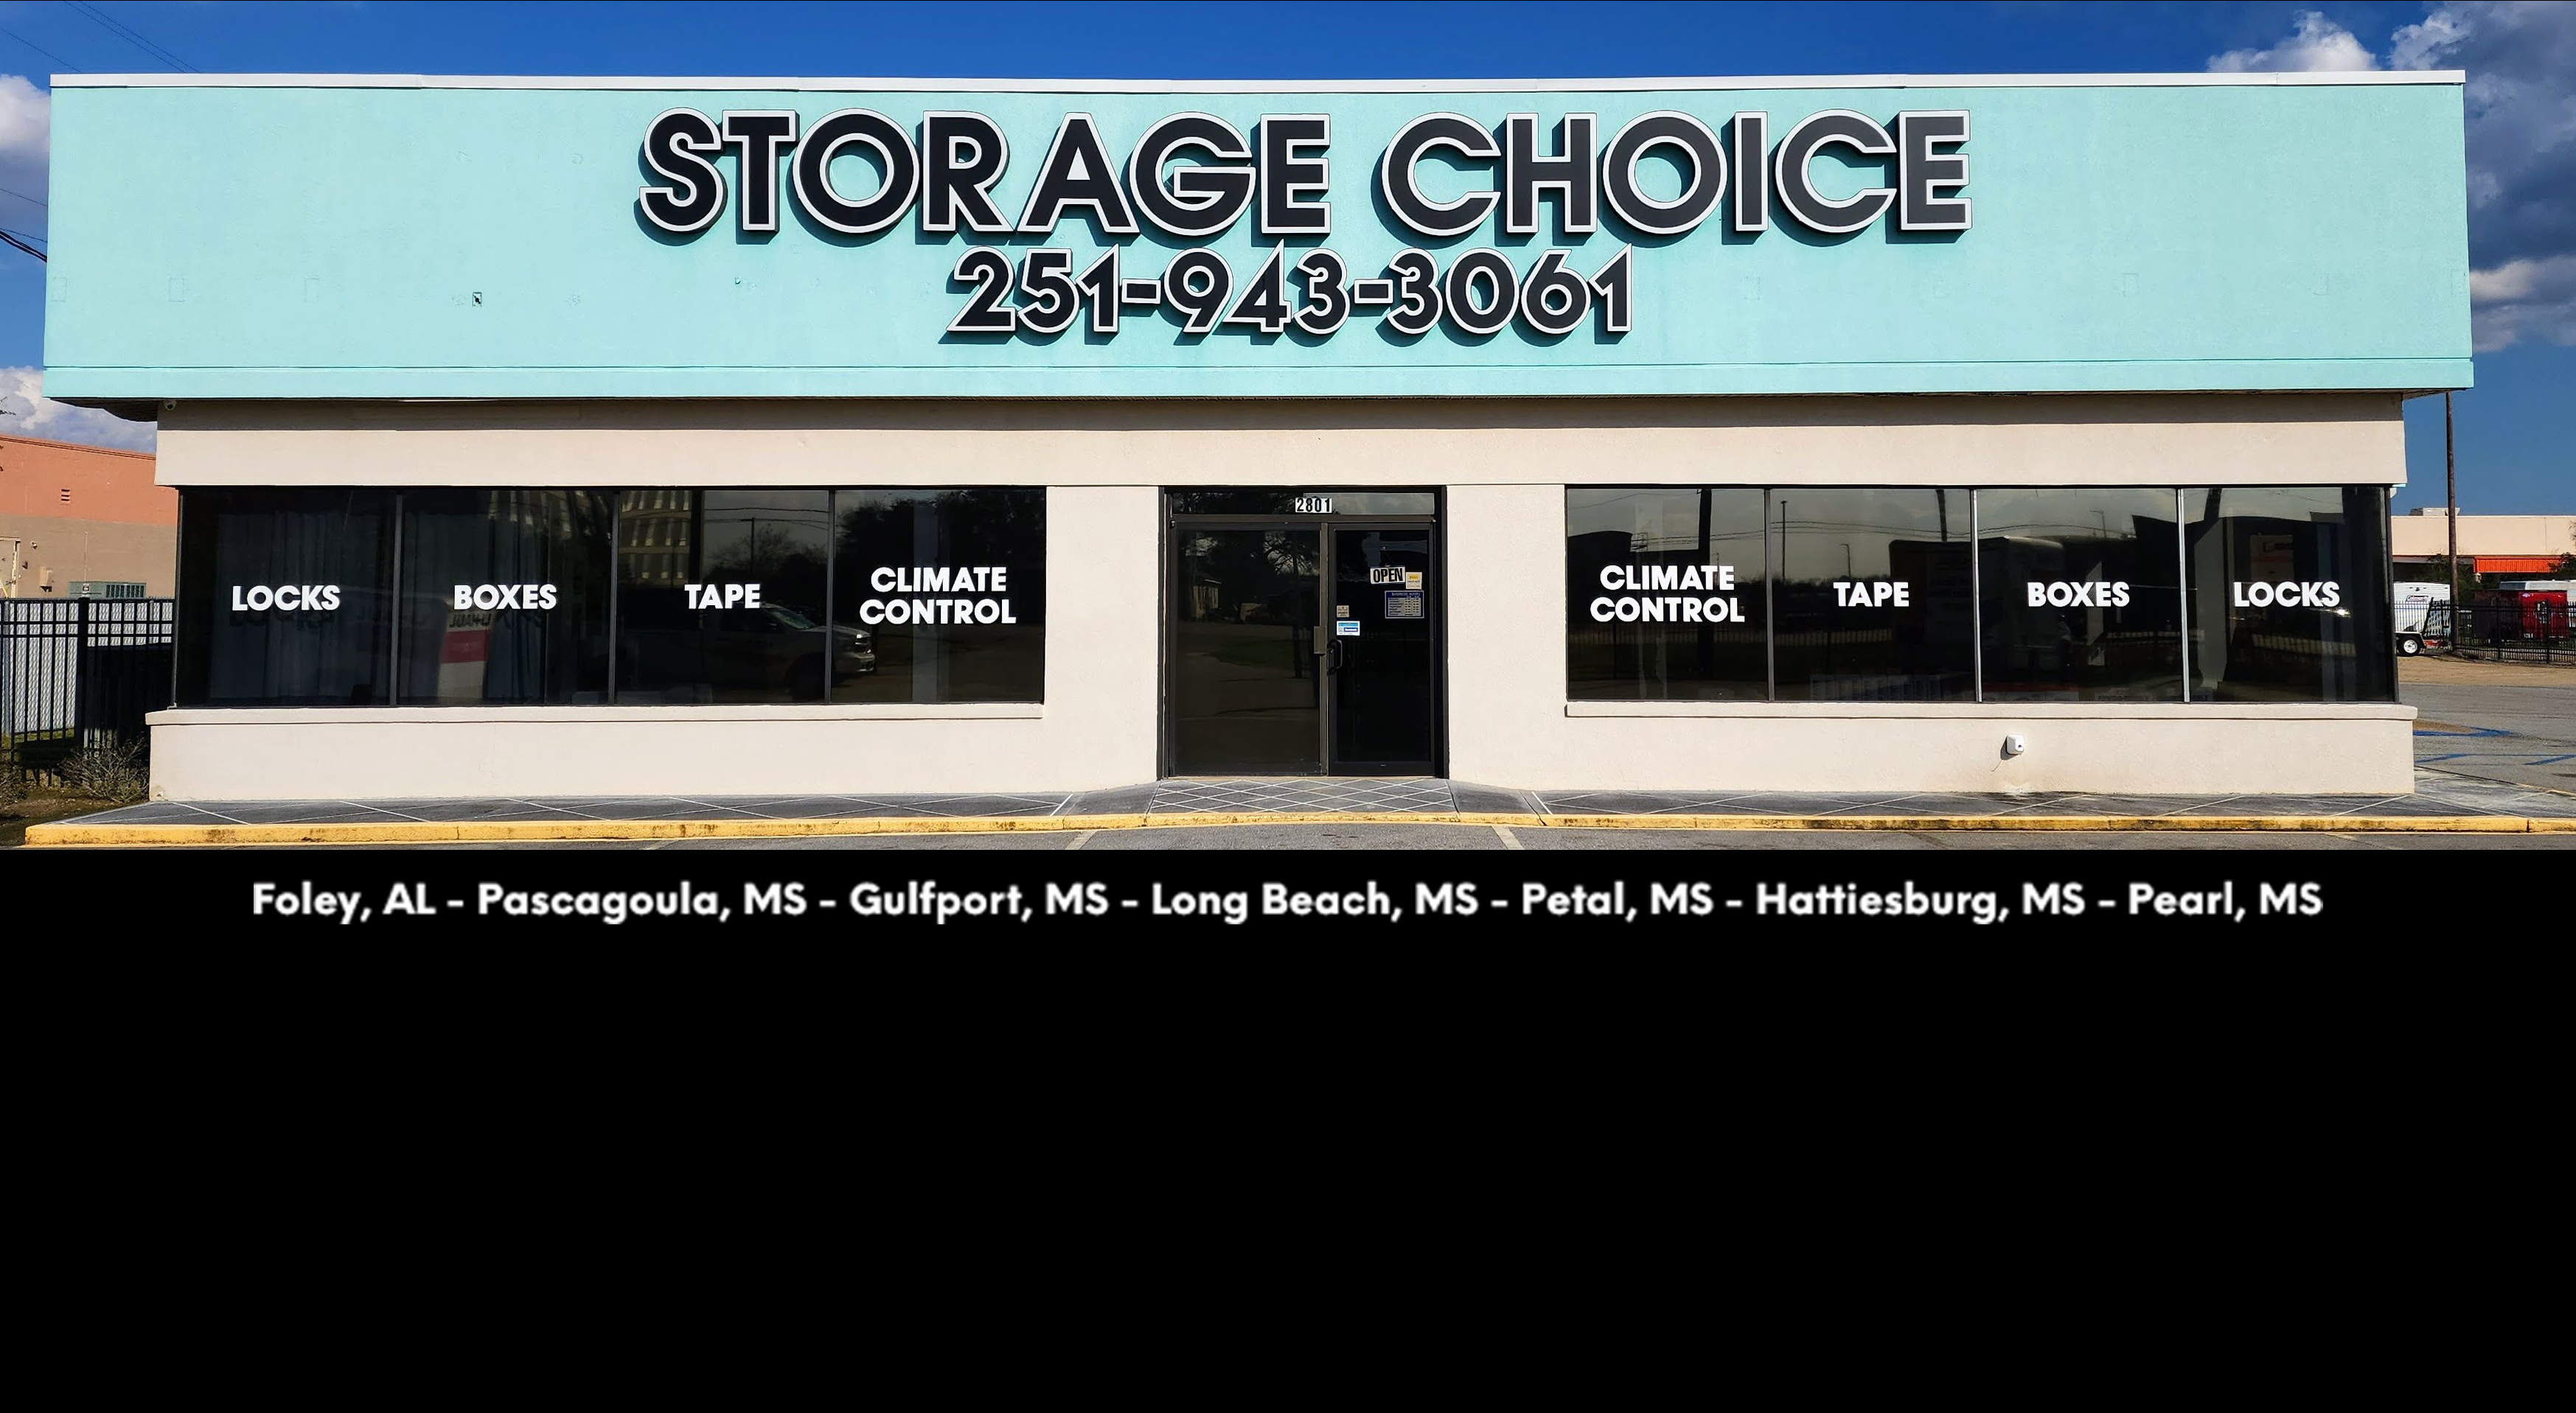 Storage Choice Foley Alabama